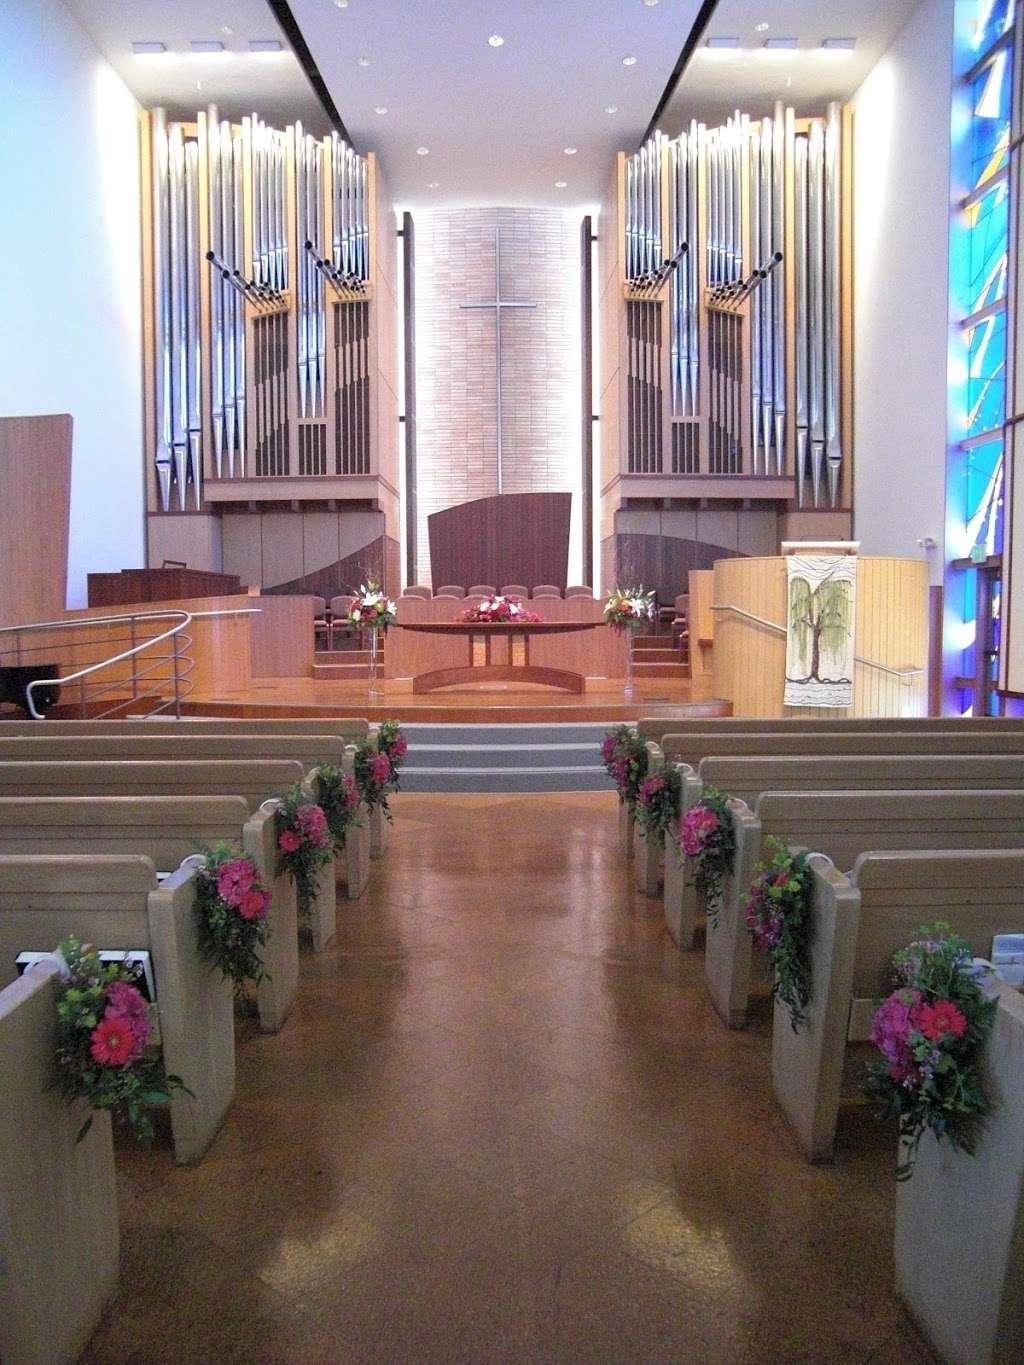 First Congregational Church of Palo Alto, 1985 Louis Rd